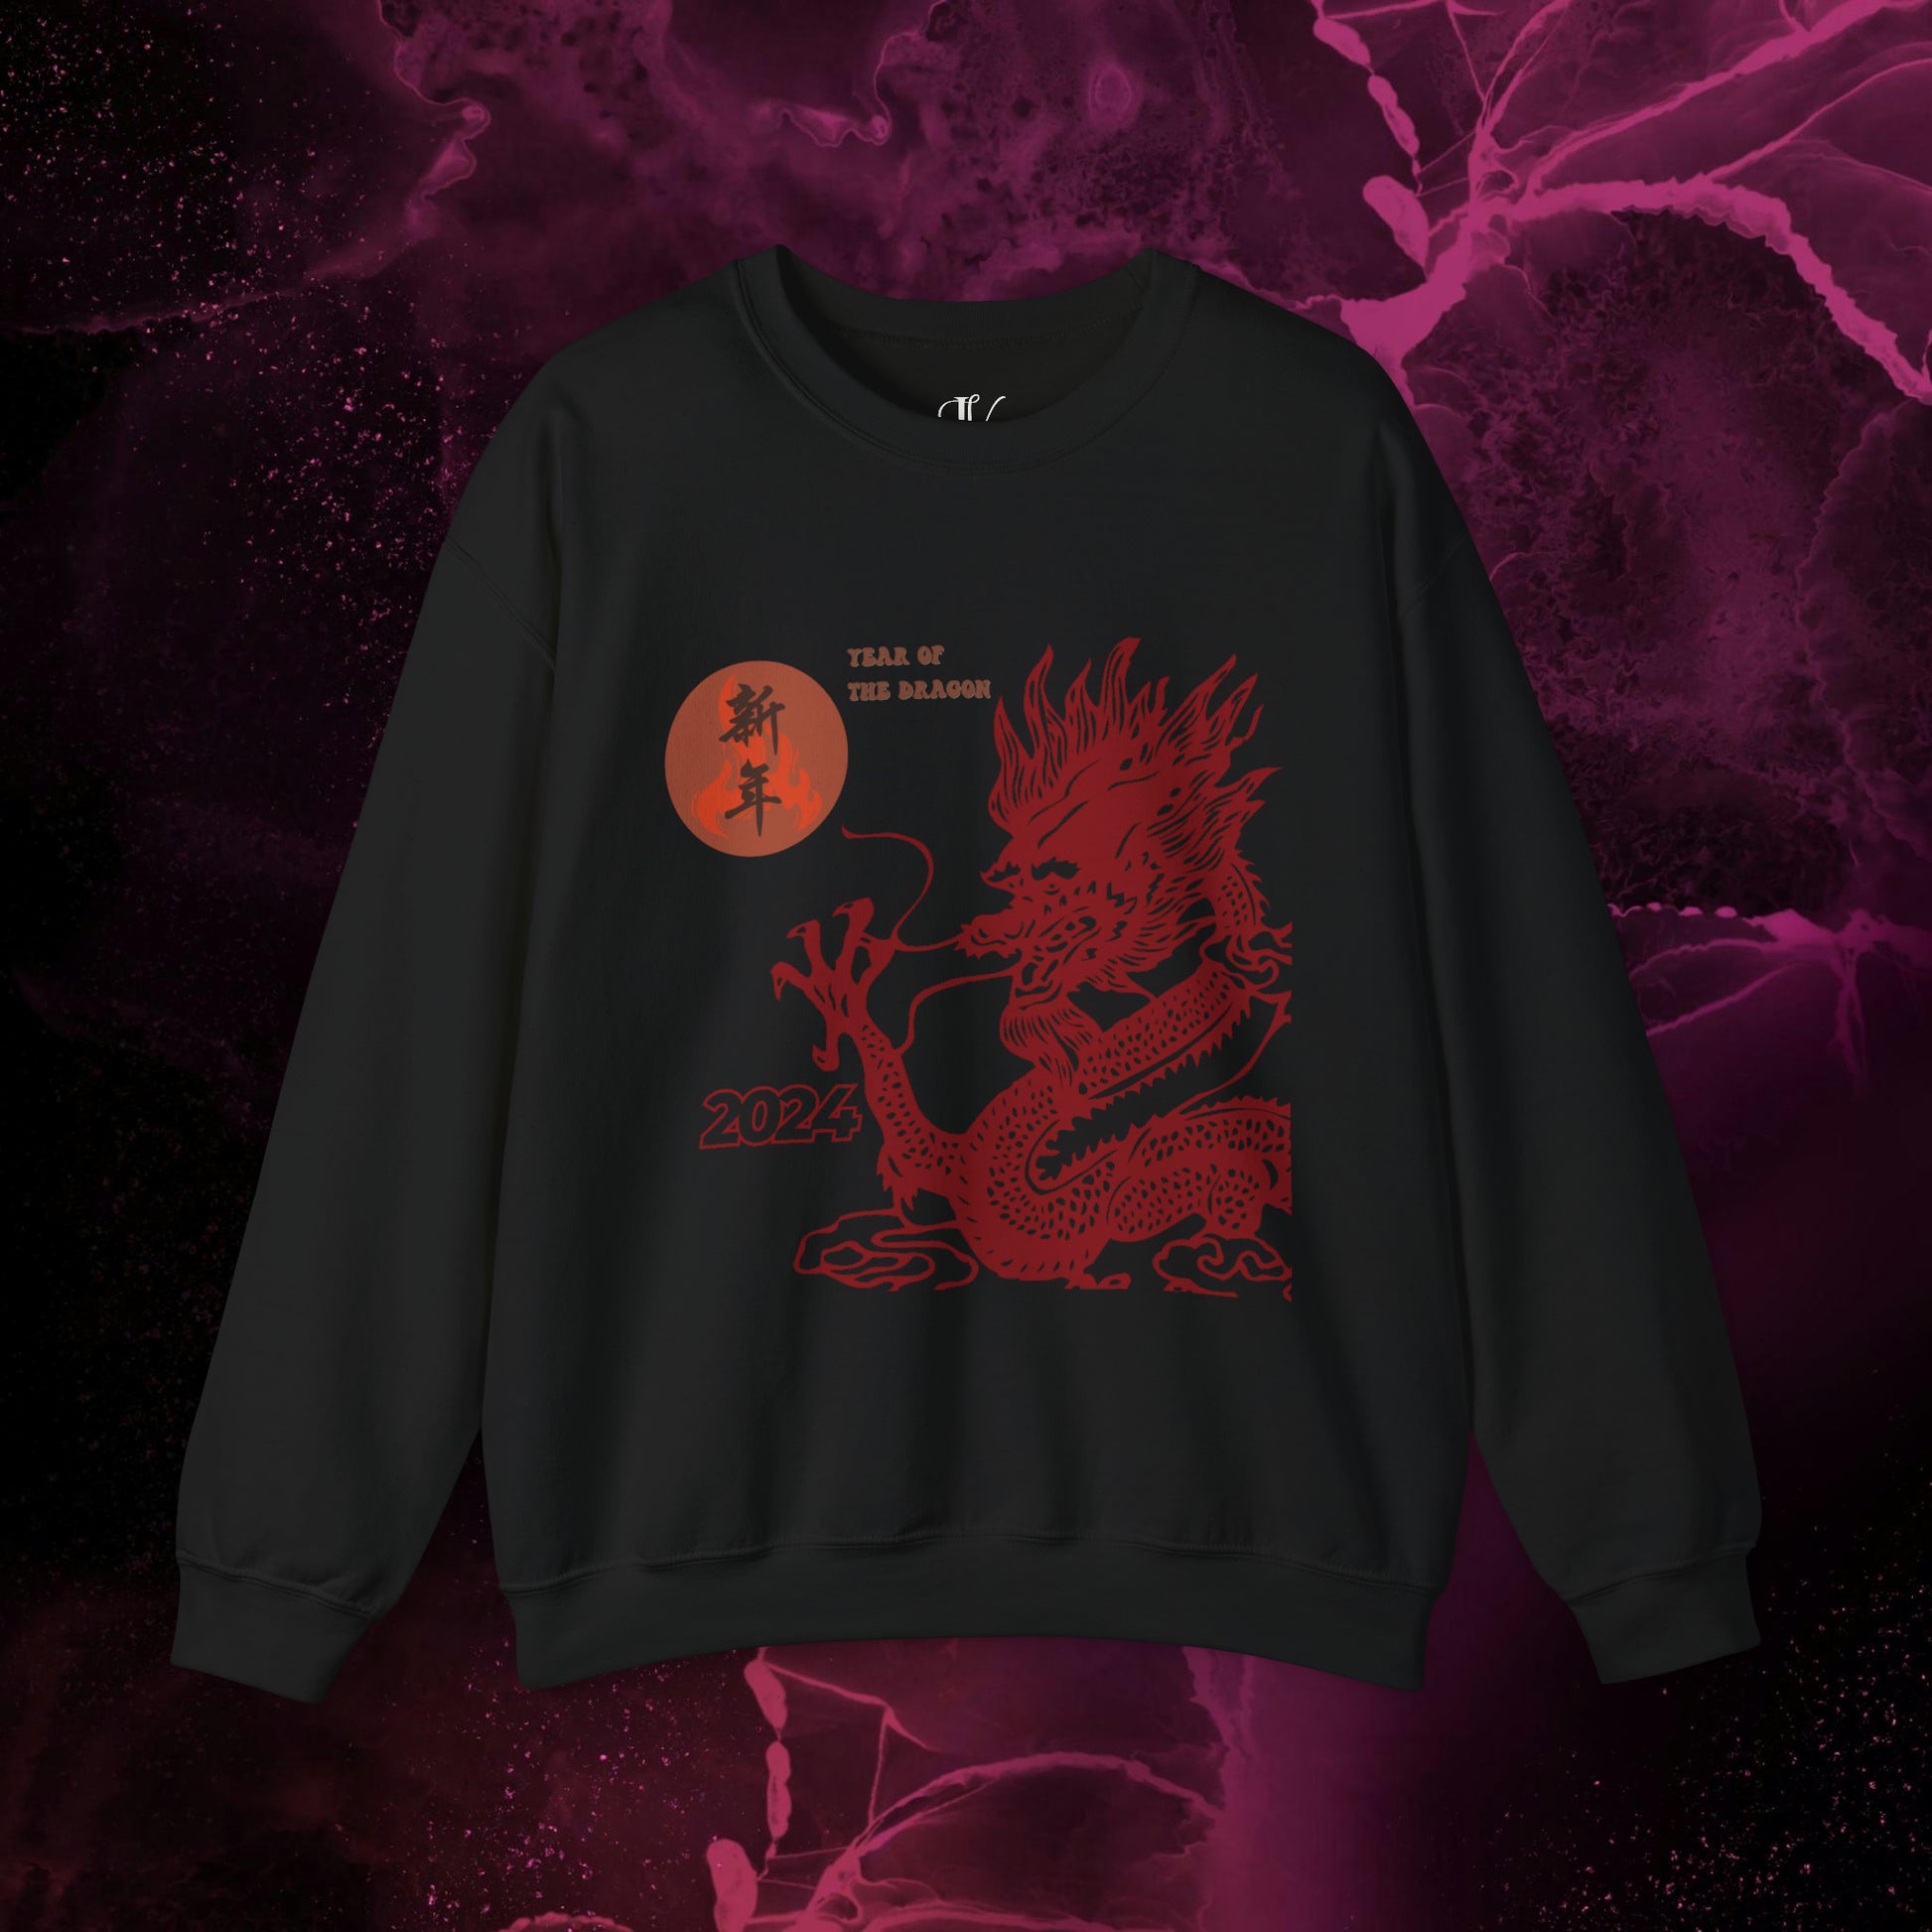 Year of the Dragon Sweatshirt - 2024 Chinese Zodiac Shirt for Lunar New Year Sweatshirt S Black 